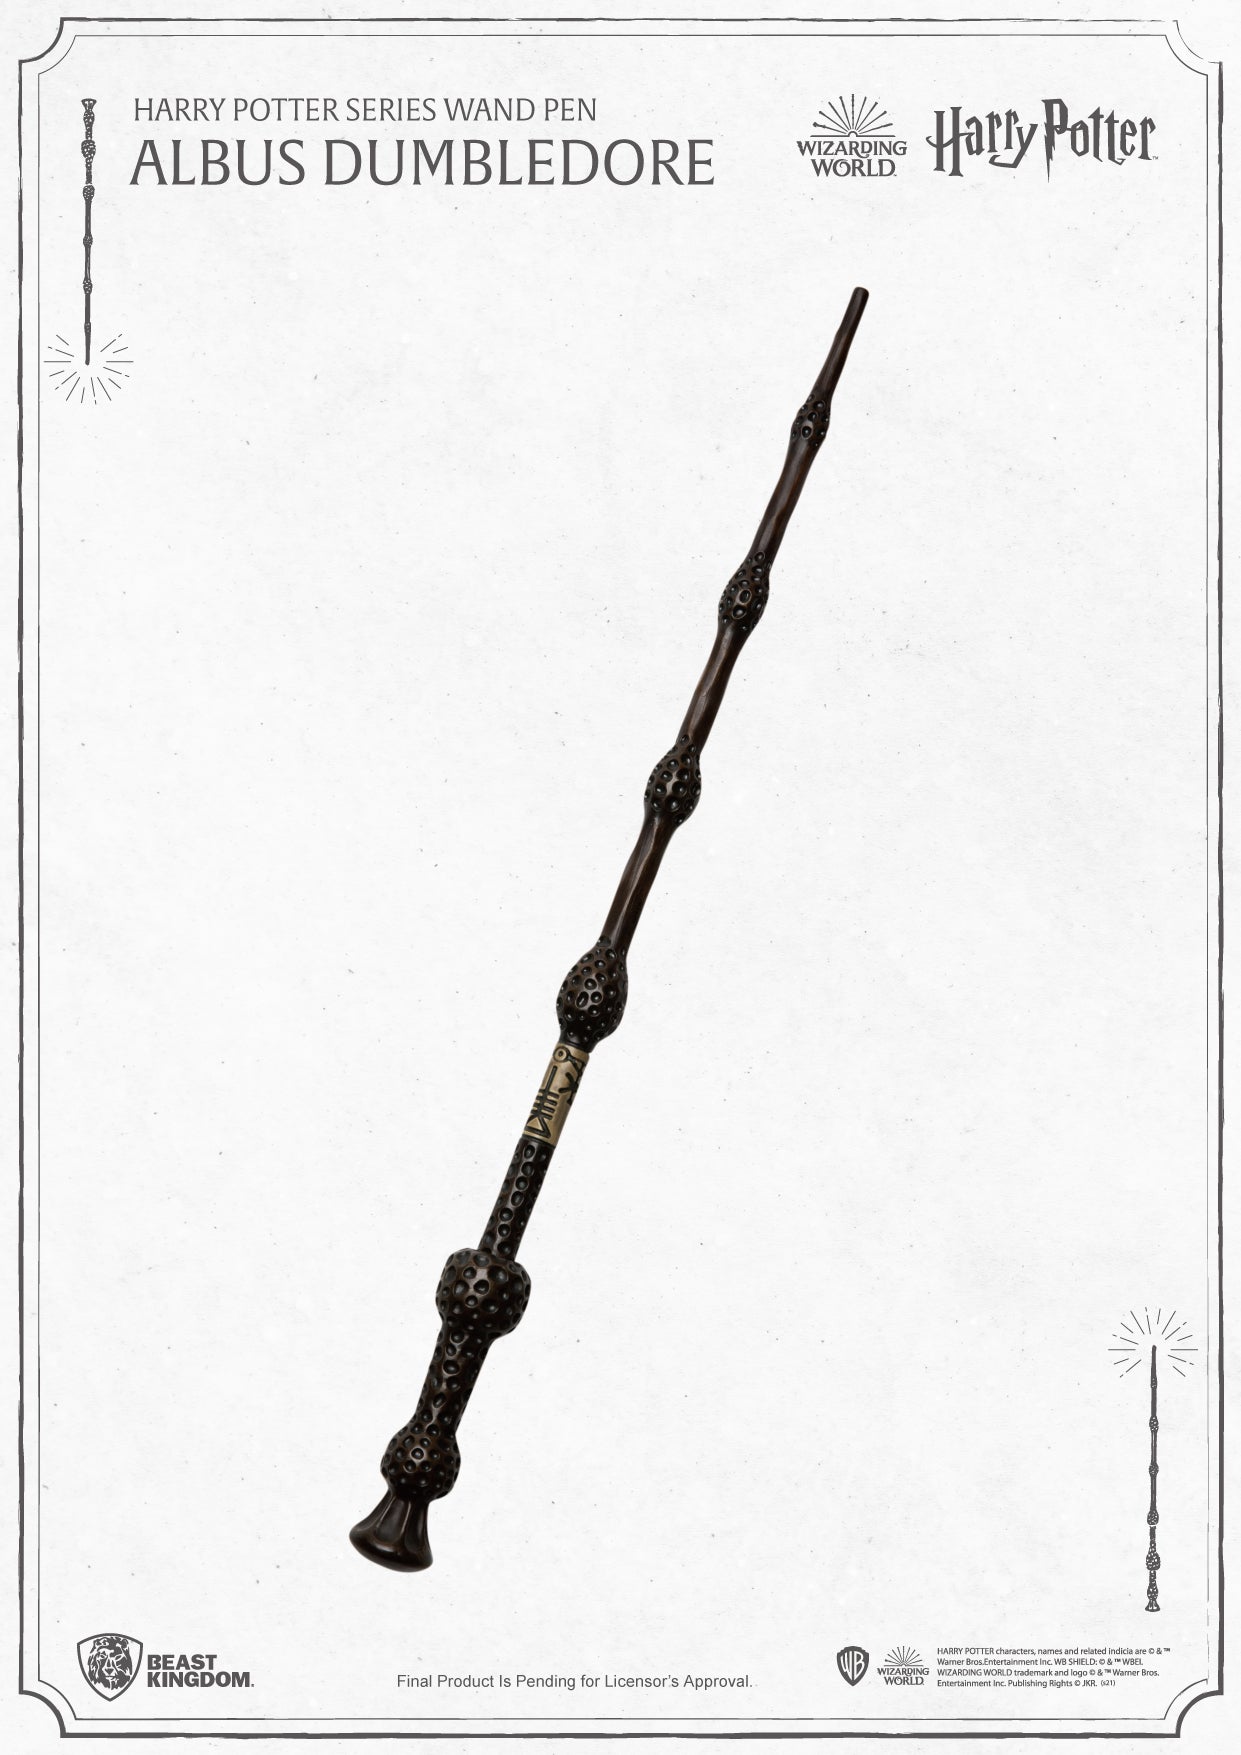 Harry Potter Series Wand Pen Albus Dumbledore